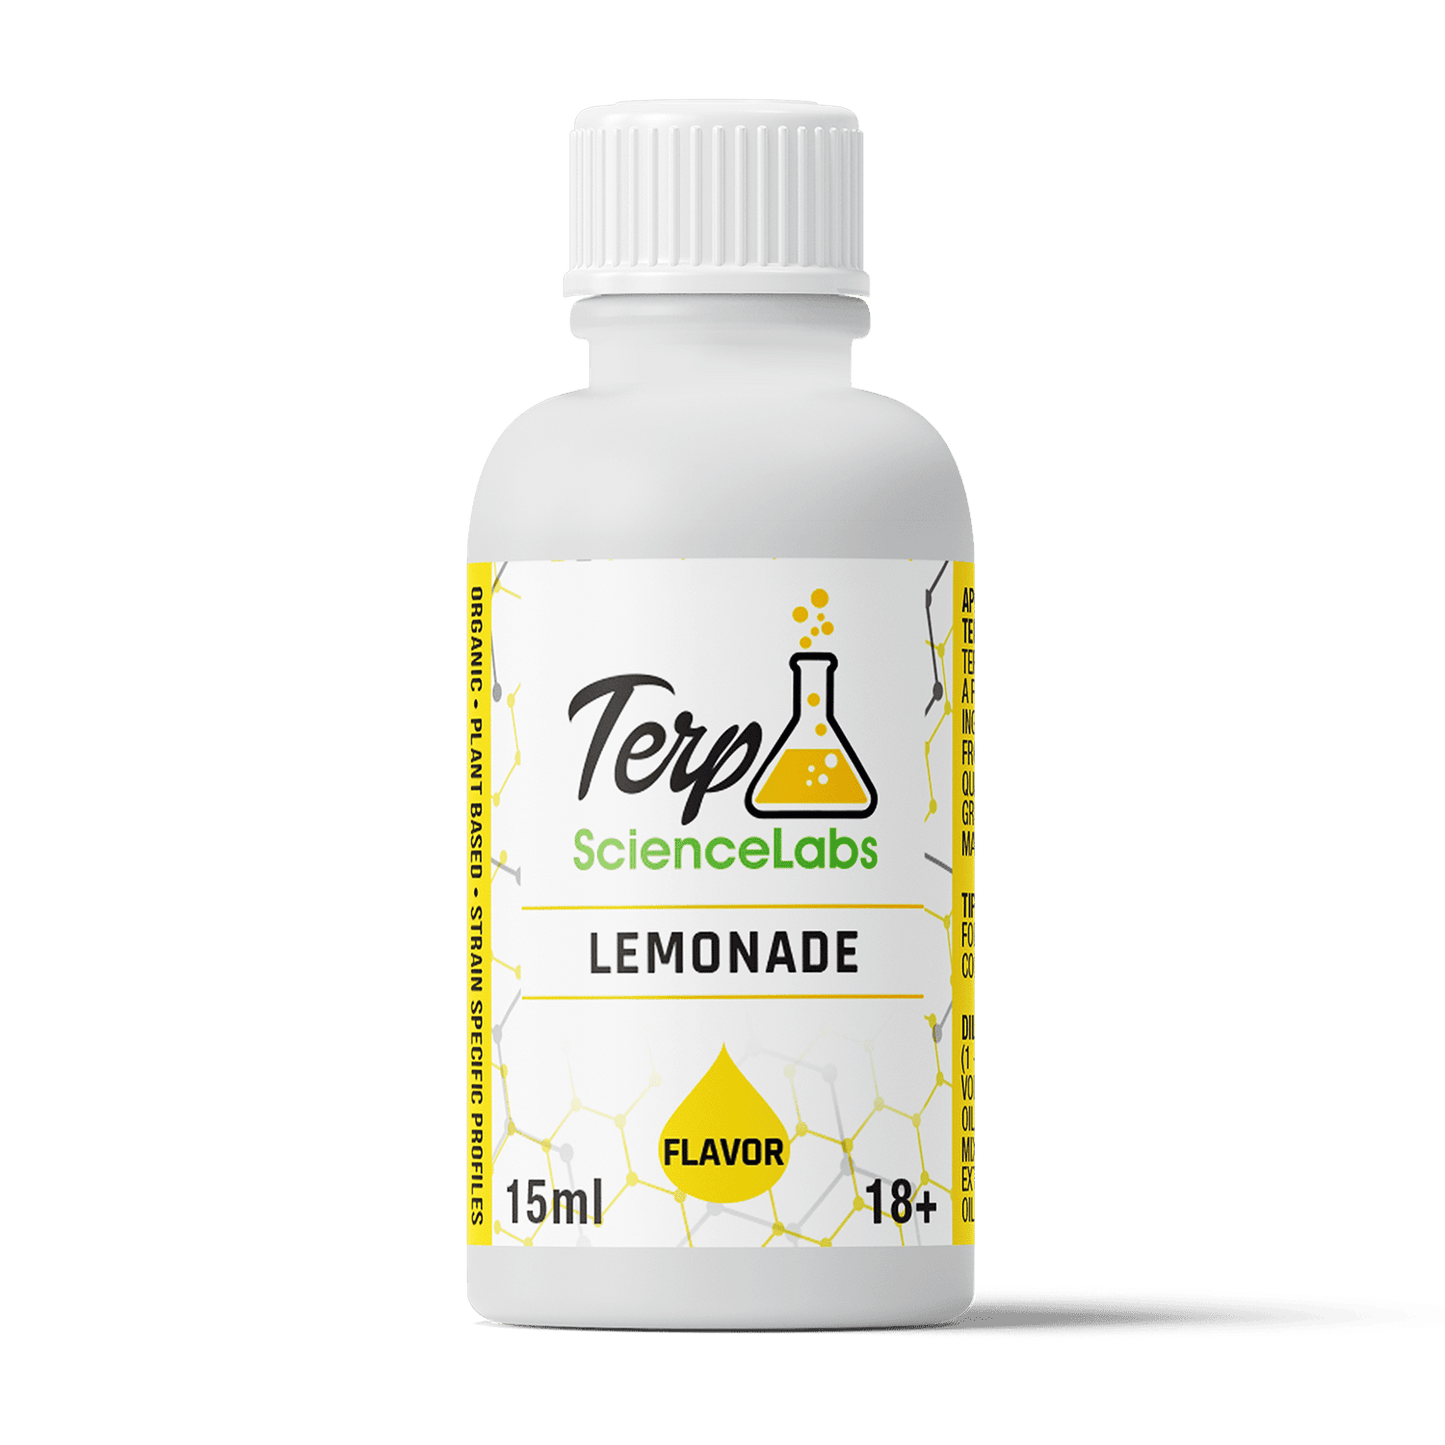 Lemonade Flavor Profile